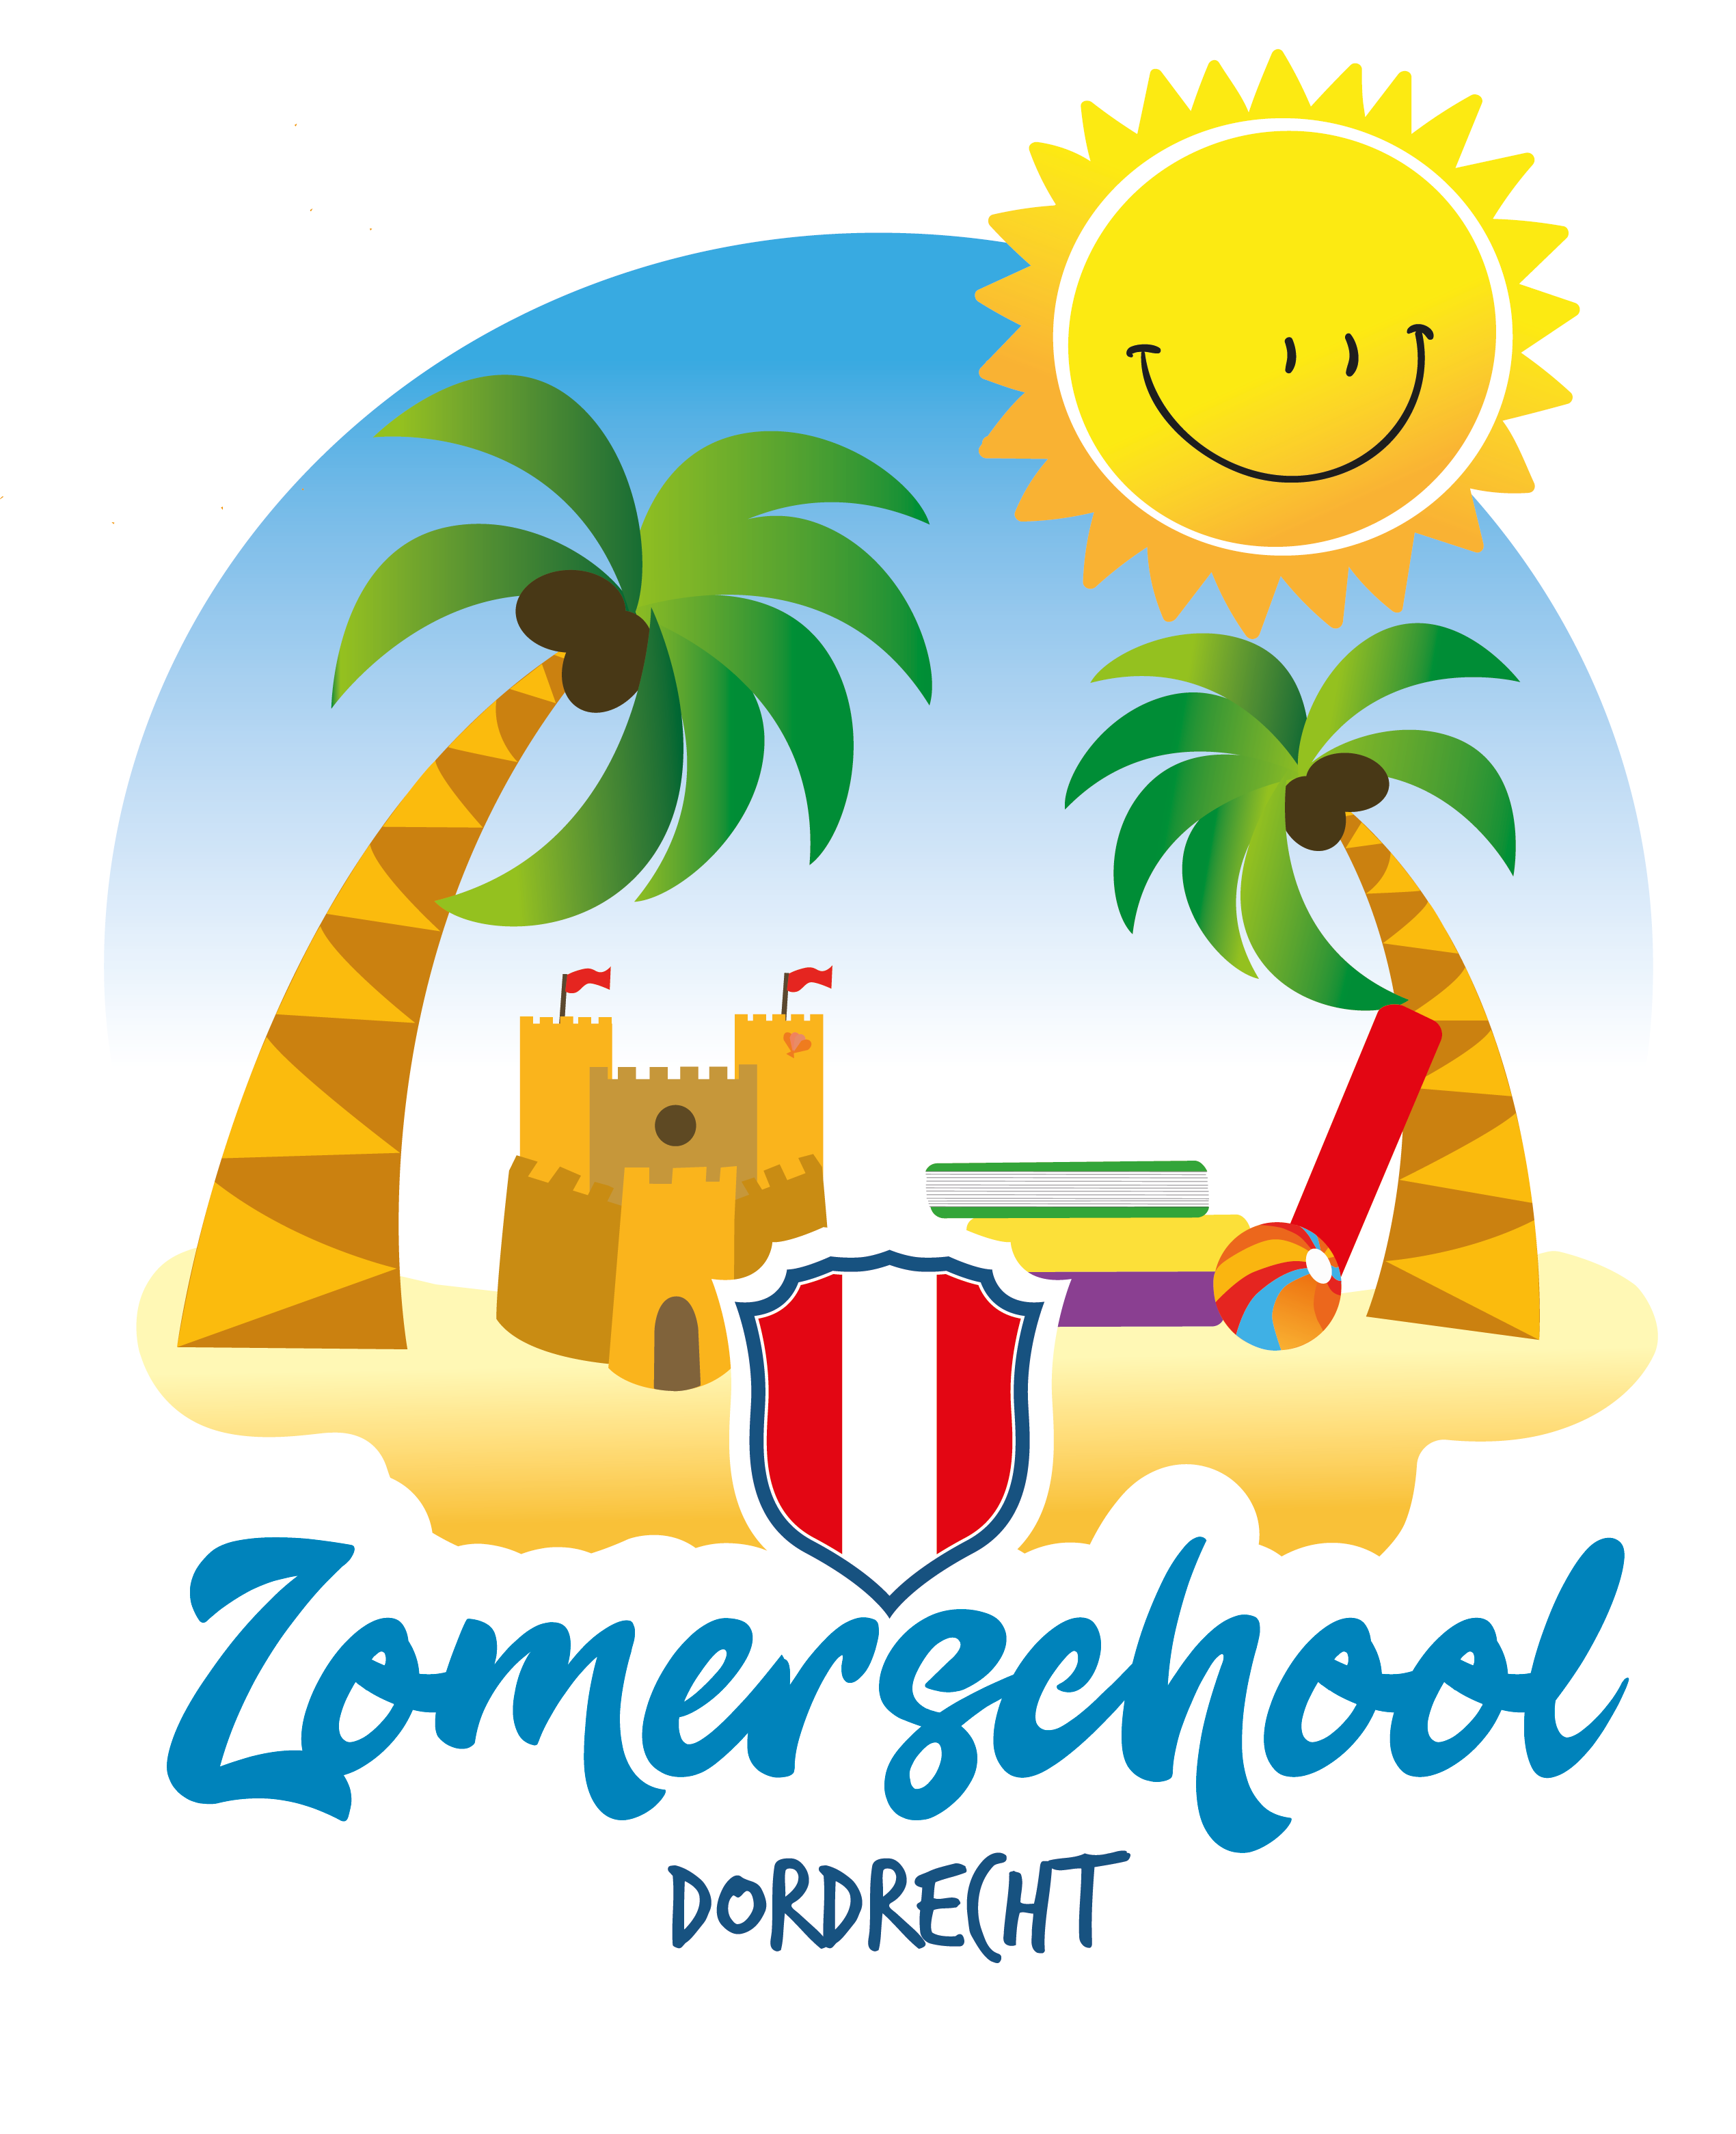 Zomerschool logo 2018.png